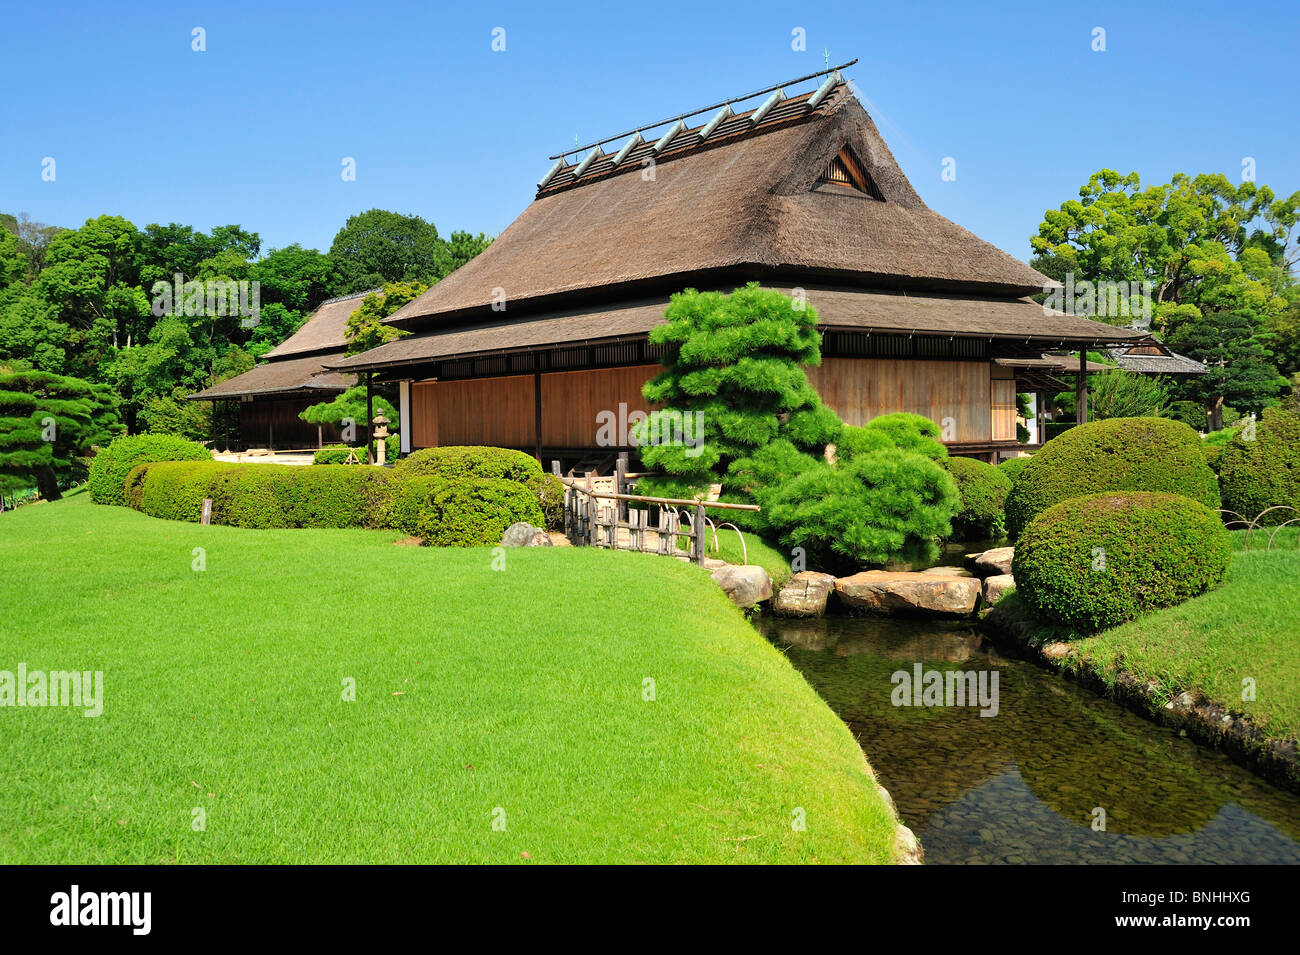 Japan Koraku-En japanischen Gartens Okayama Okayama Präfektur Asien Enyo-Tei Haus außen Garten Honshu Insel japanischen Koraku-En Stockfoto